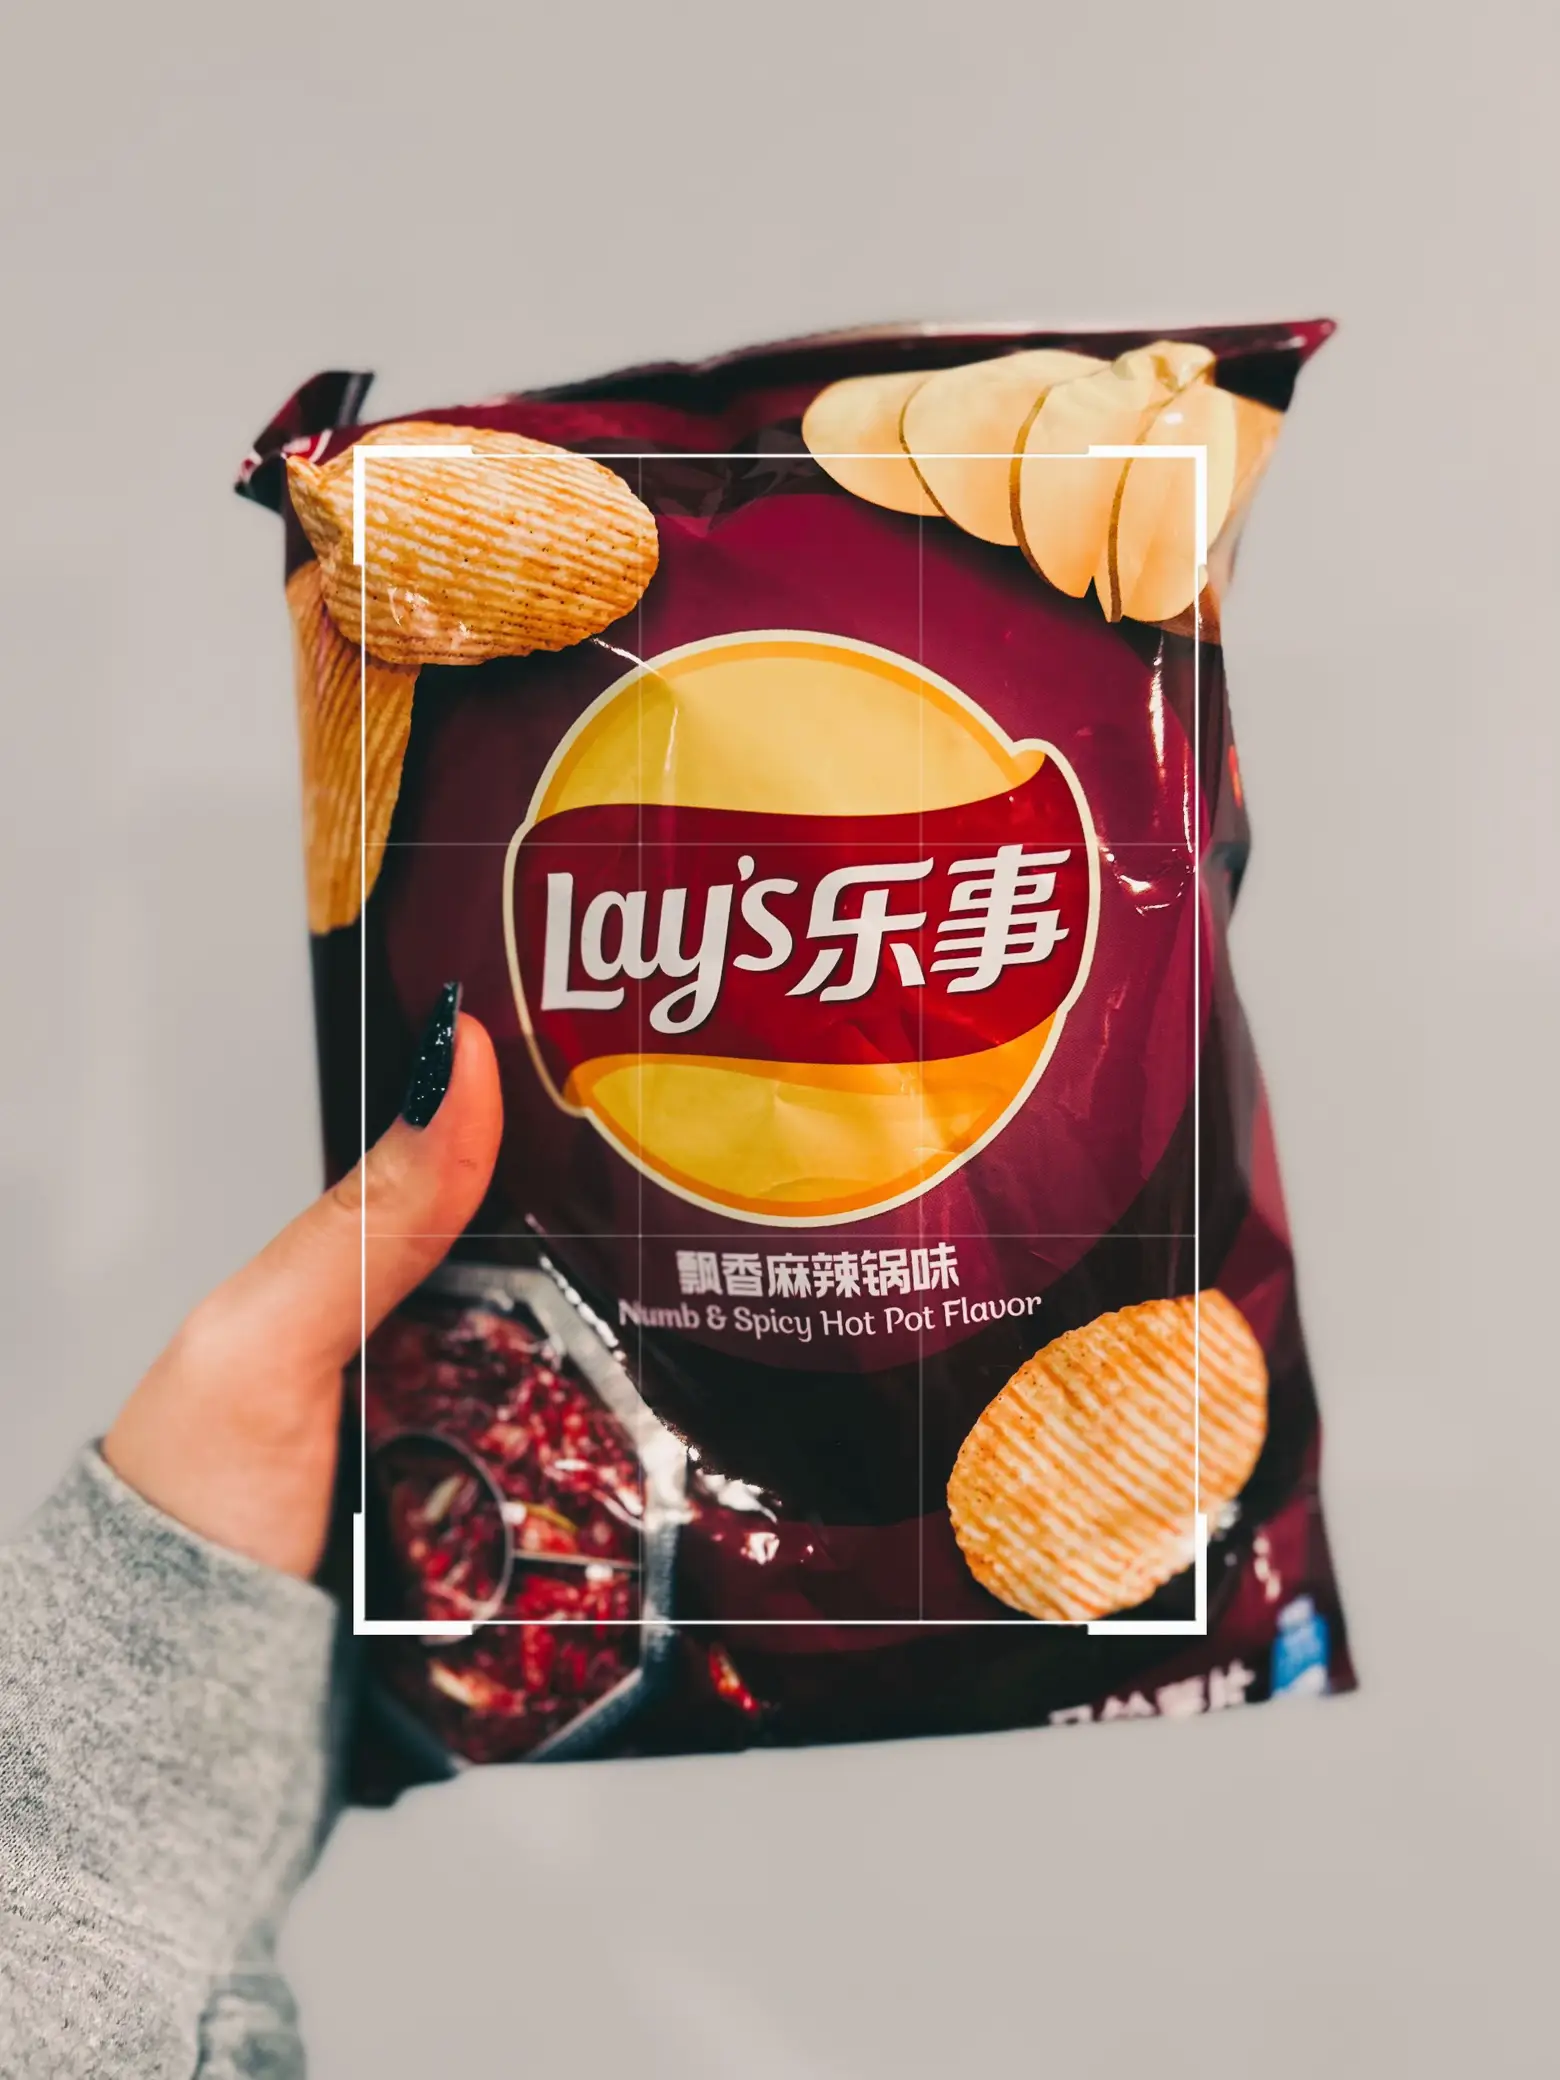 new flavor of Lays potato chips - Lemon8 Search